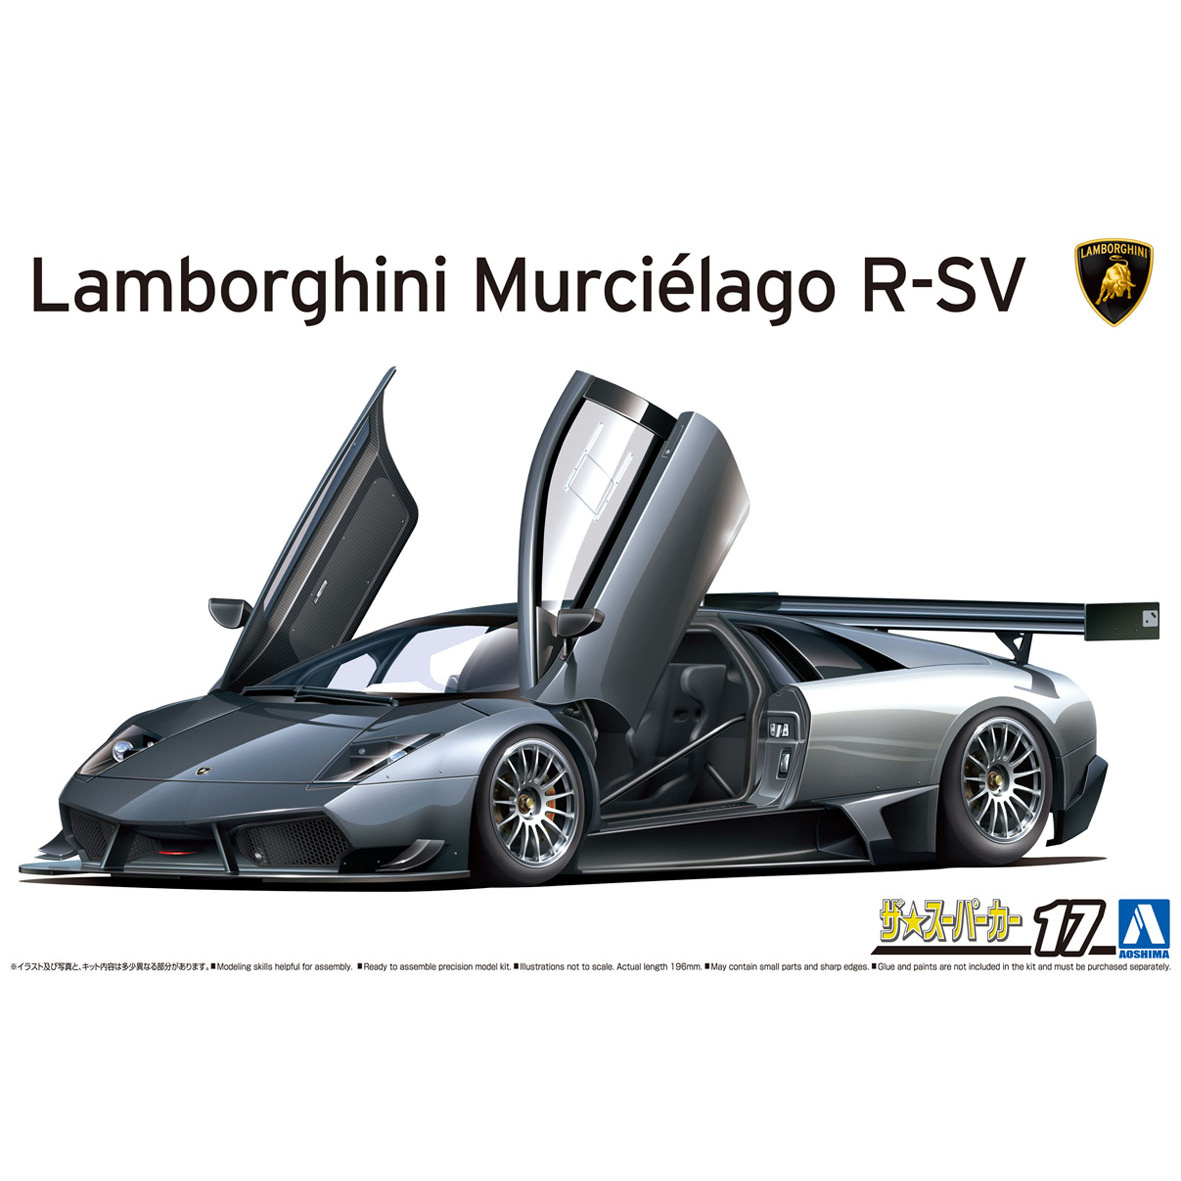 06374  автомобили и мотоциклы  Lamborghini Murcielago R-SV 2010  (1:24)